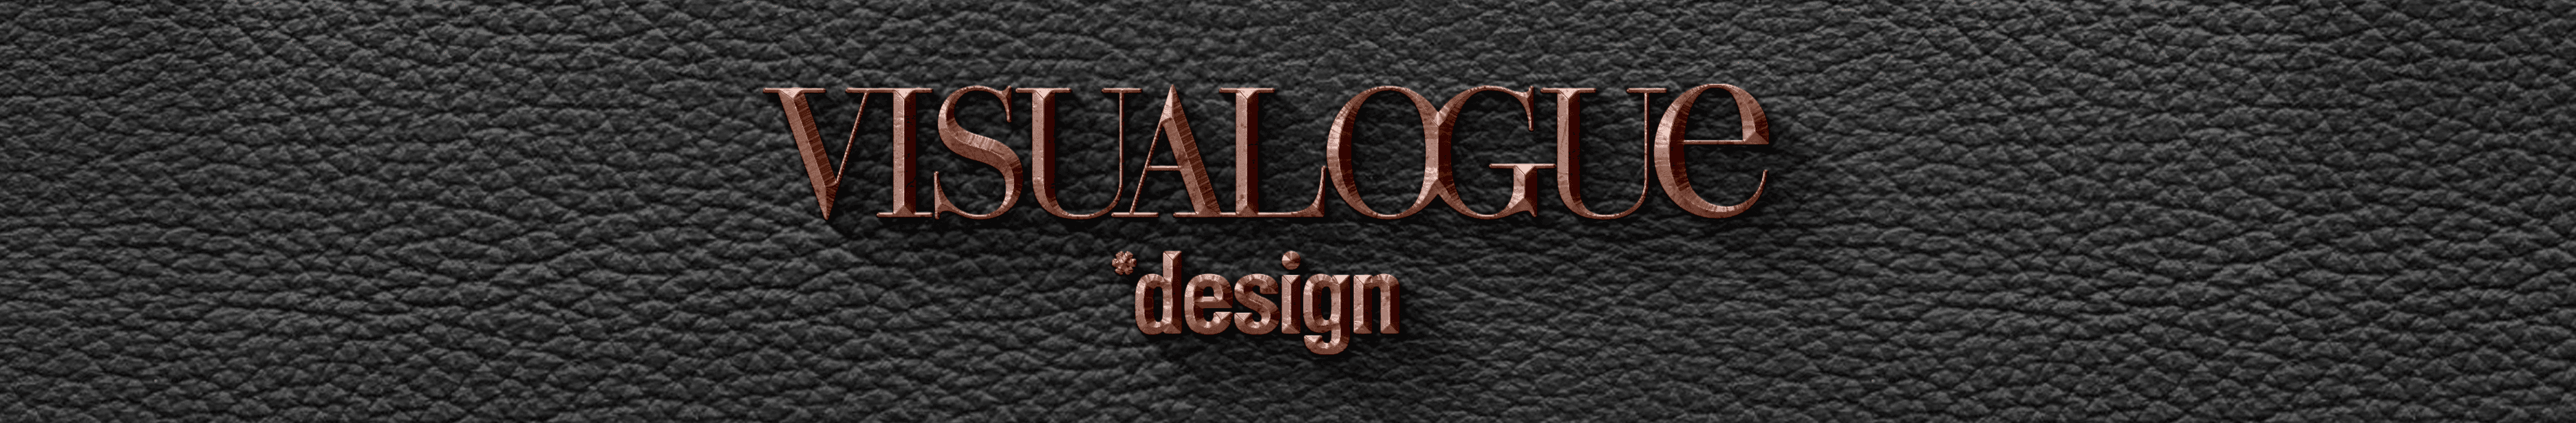 visualogue_design banner